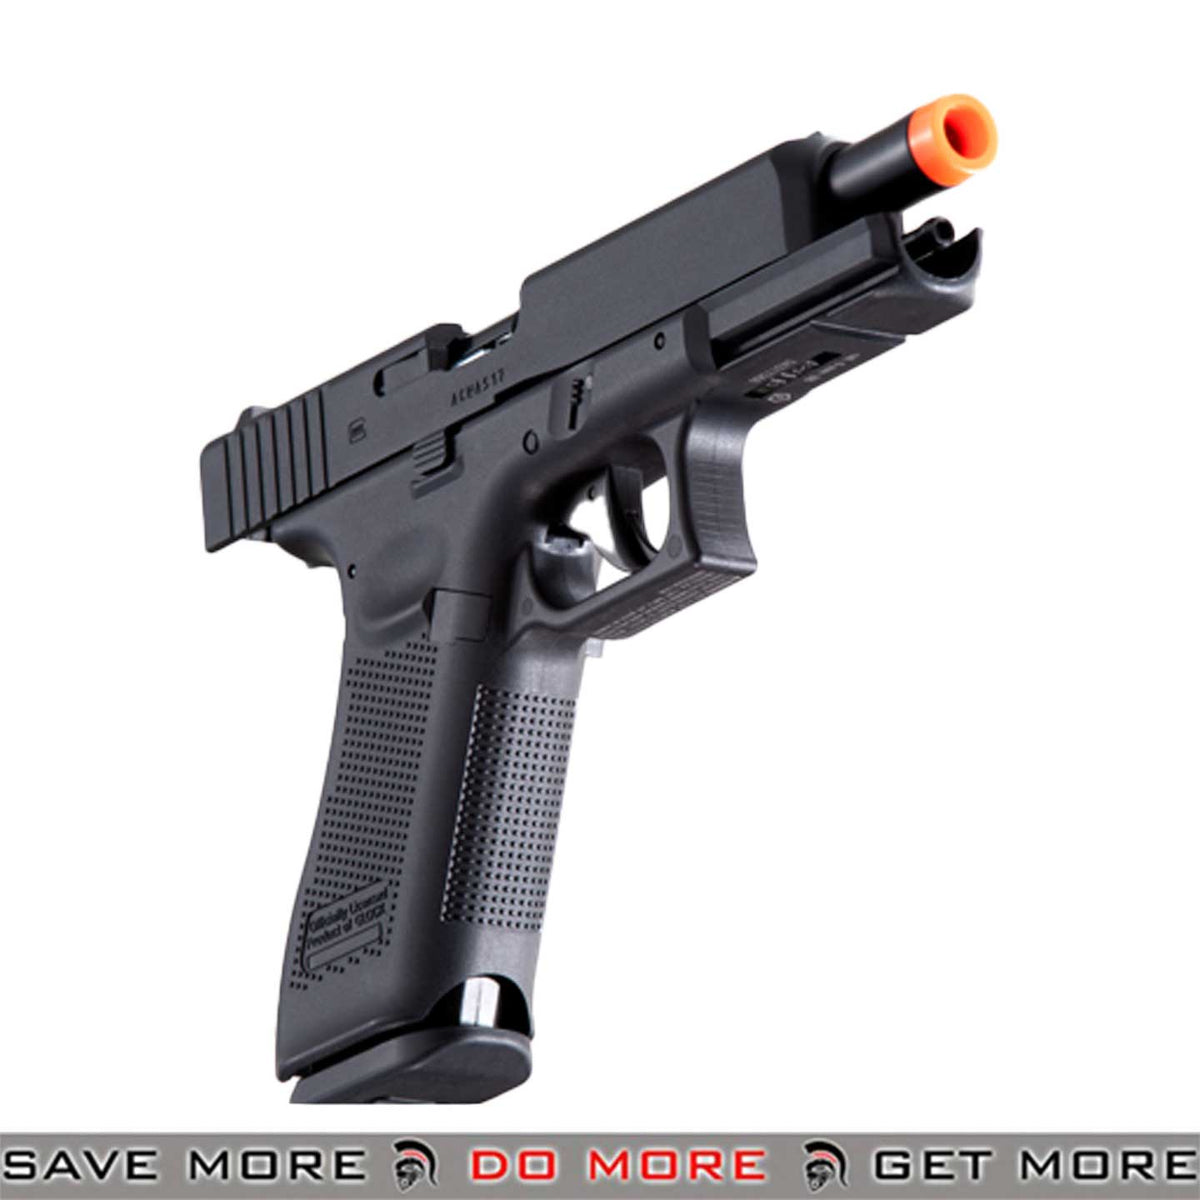 Elite Force 2276300 Glock G17 Gen 4 6mm GBB Blowback, Semi Auto Airsoft  Pistol - Black for sale online